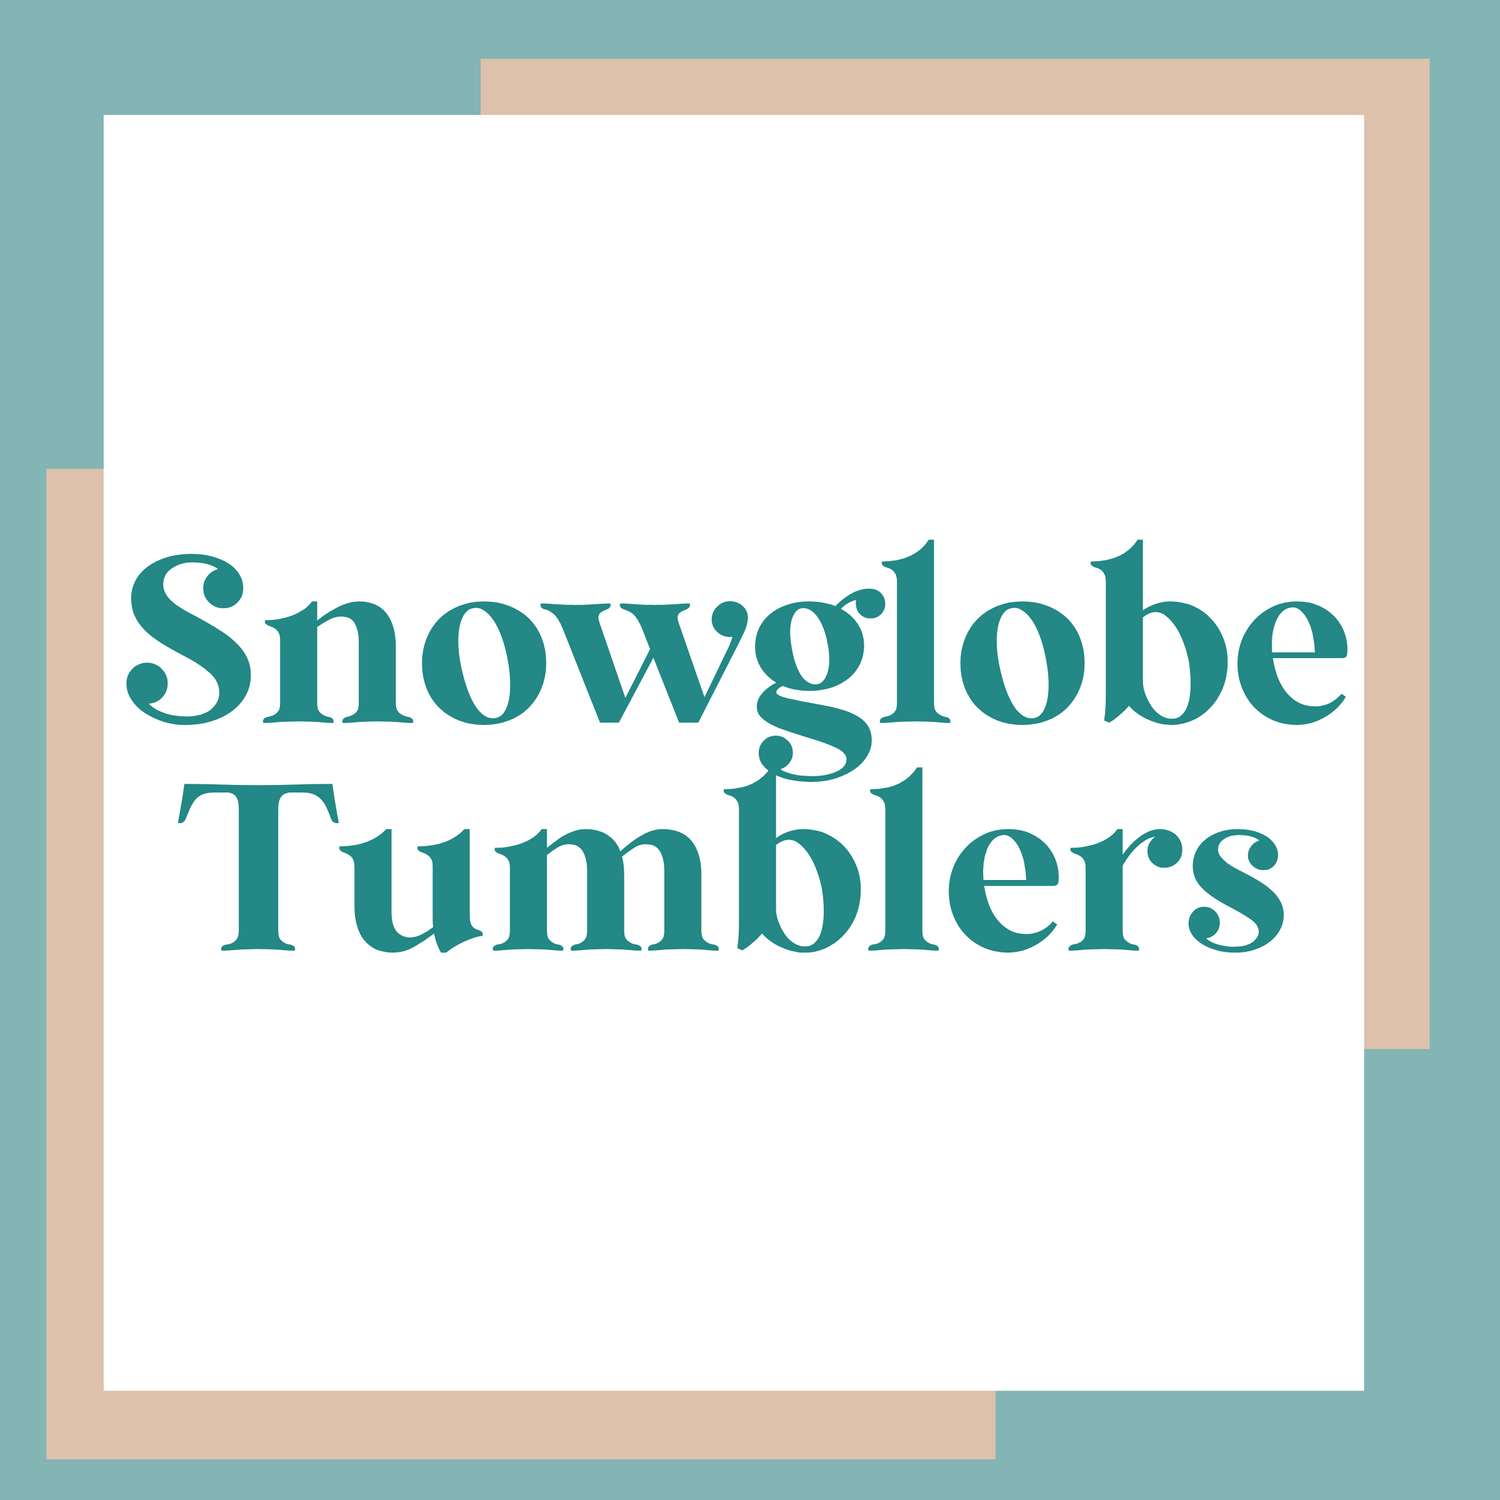 Silicone Tumbler Bumper – Ava Jane's Blanks